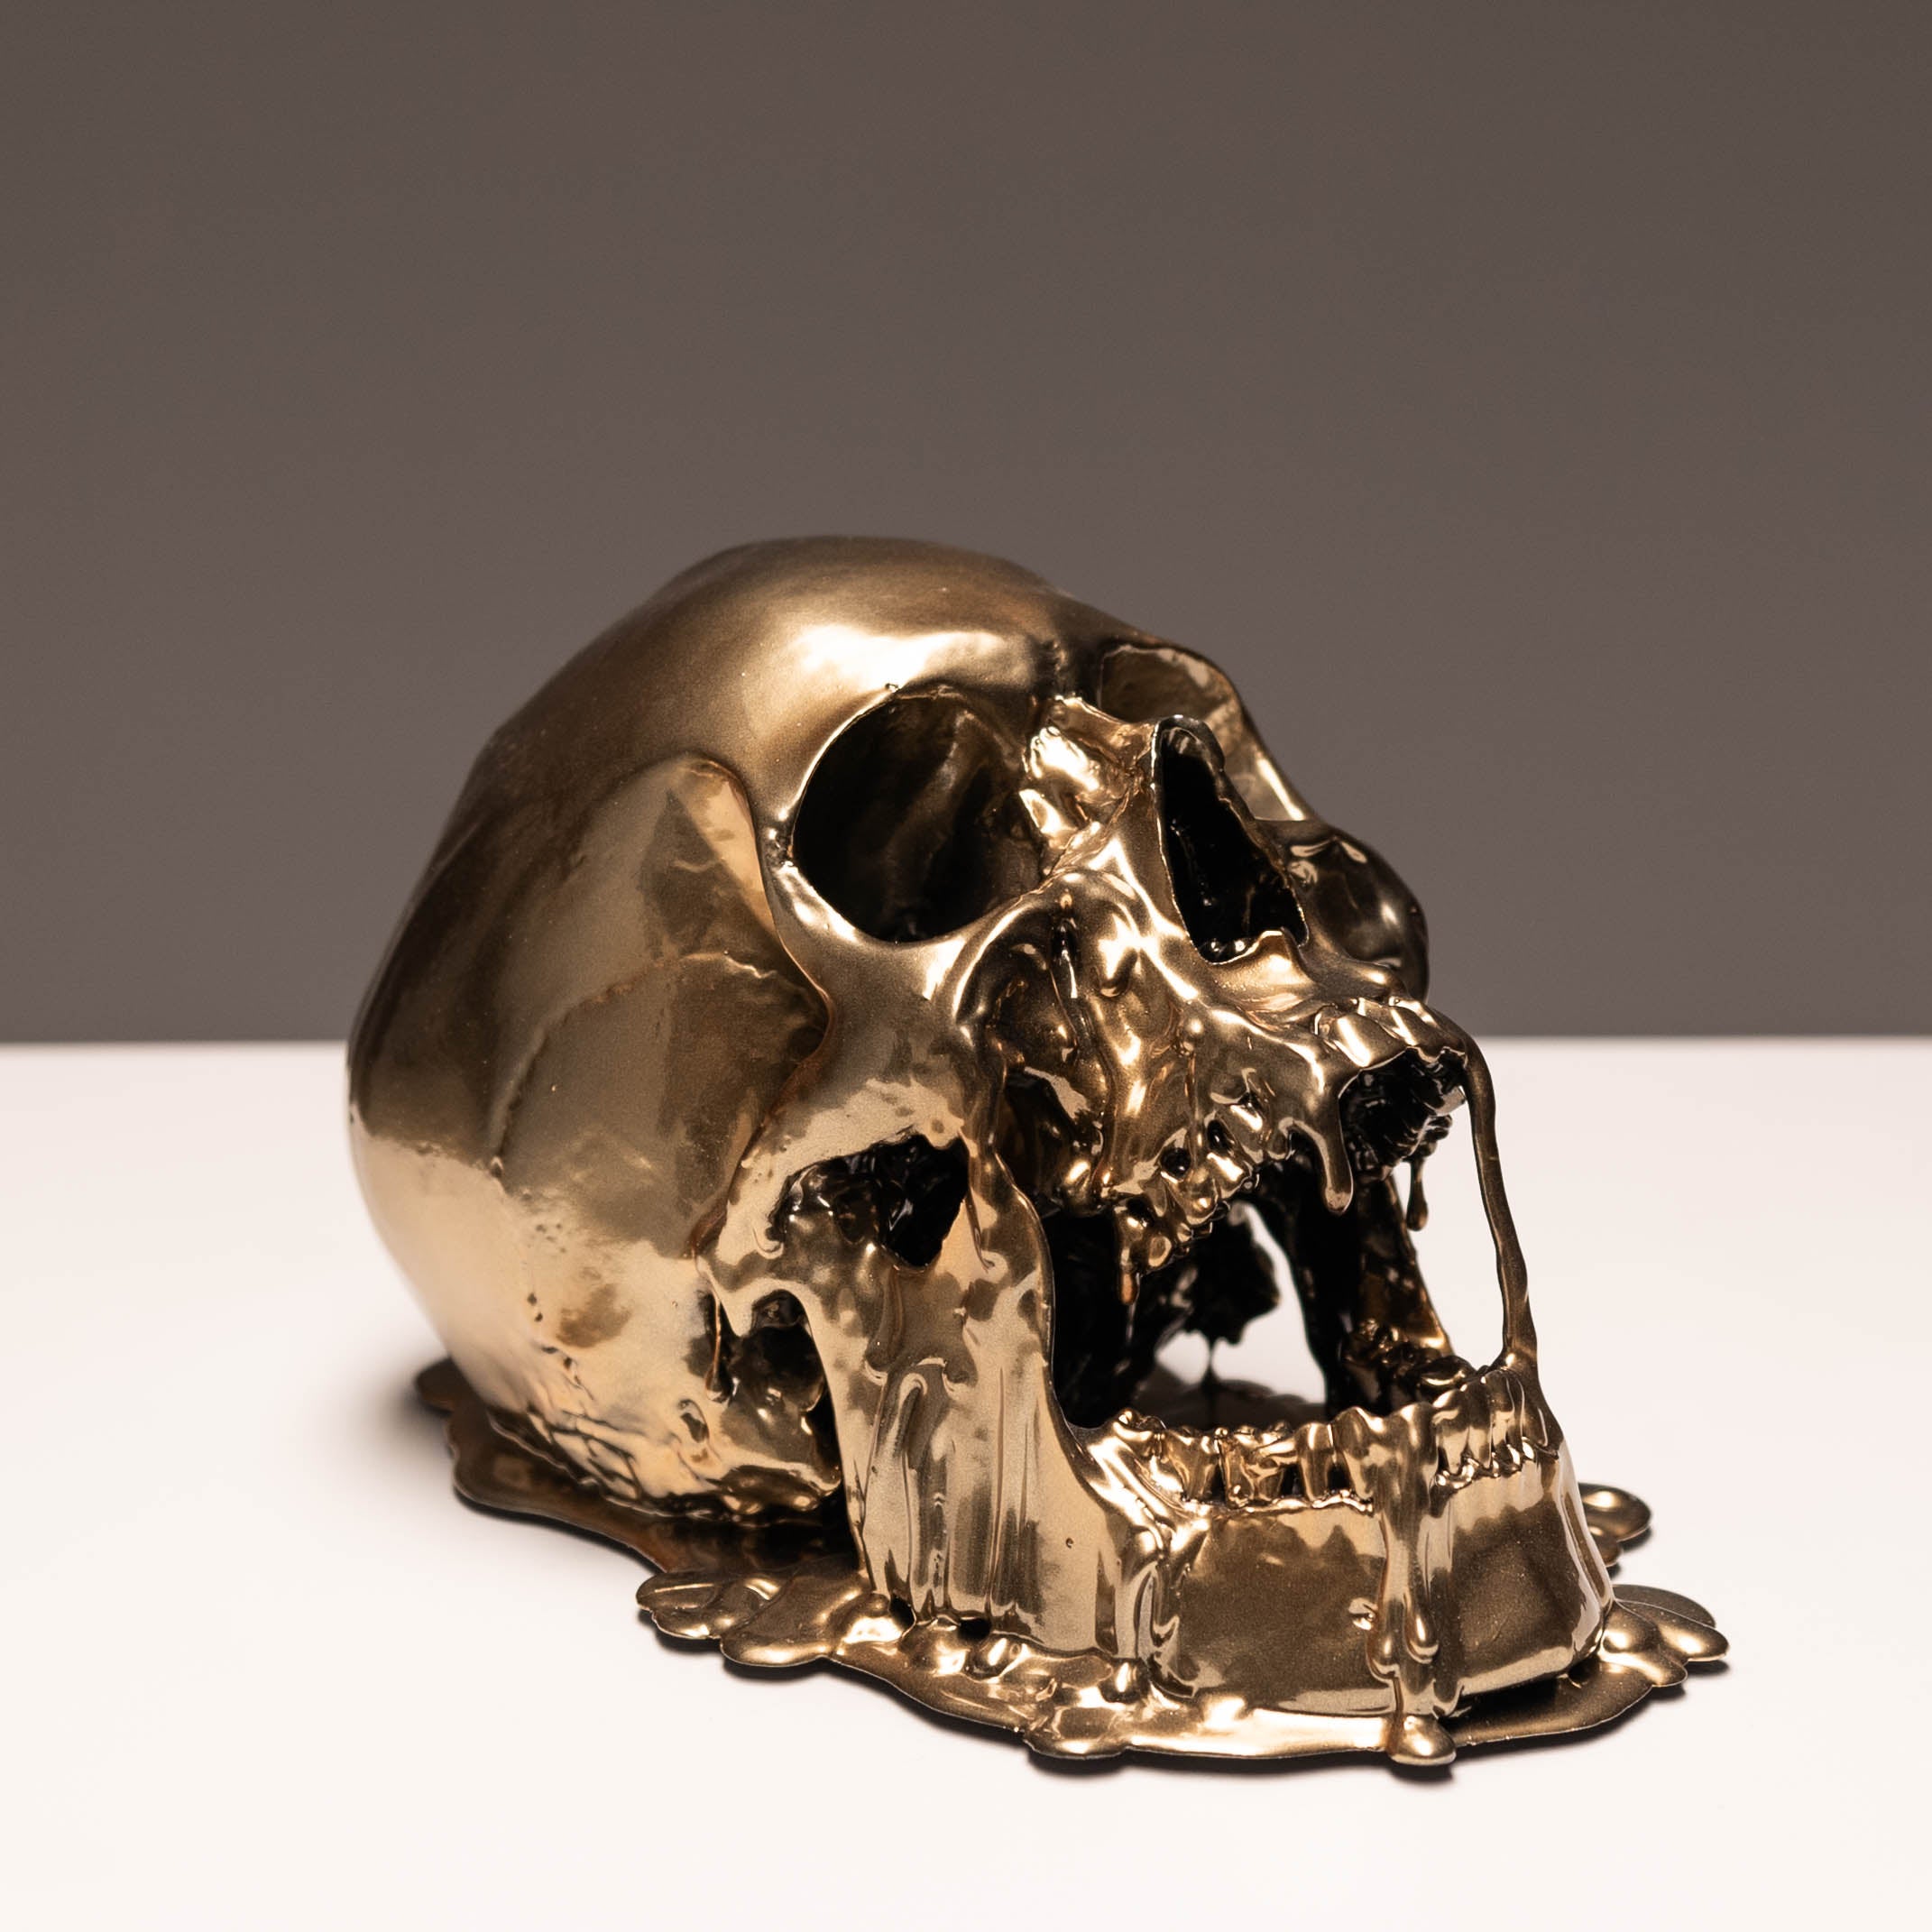 Melting Gold Skull